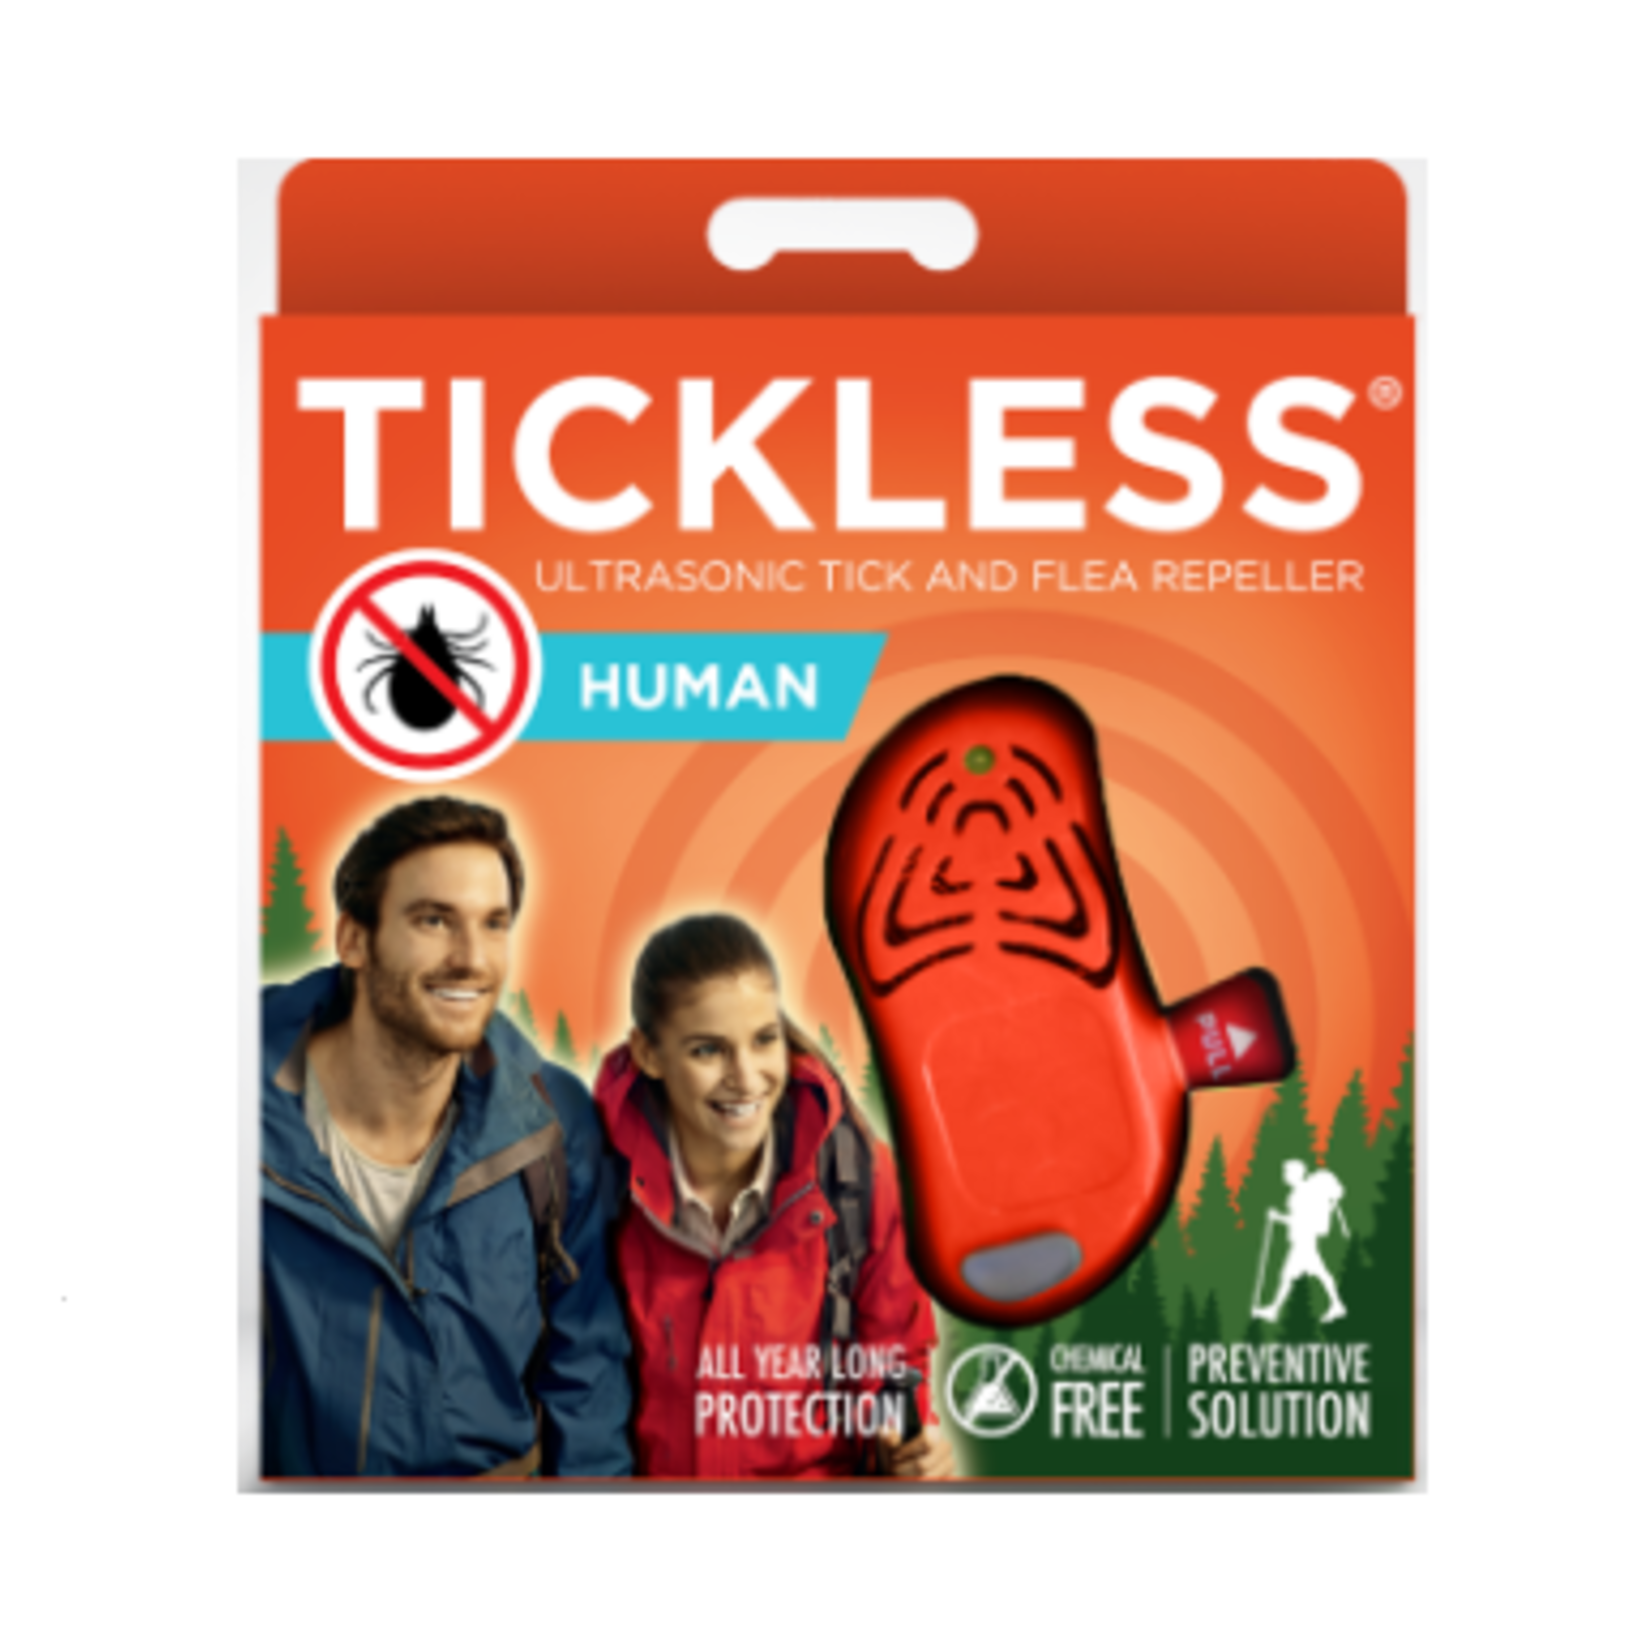 Tickless Human Ultrasonic Tick Repeller - Orange